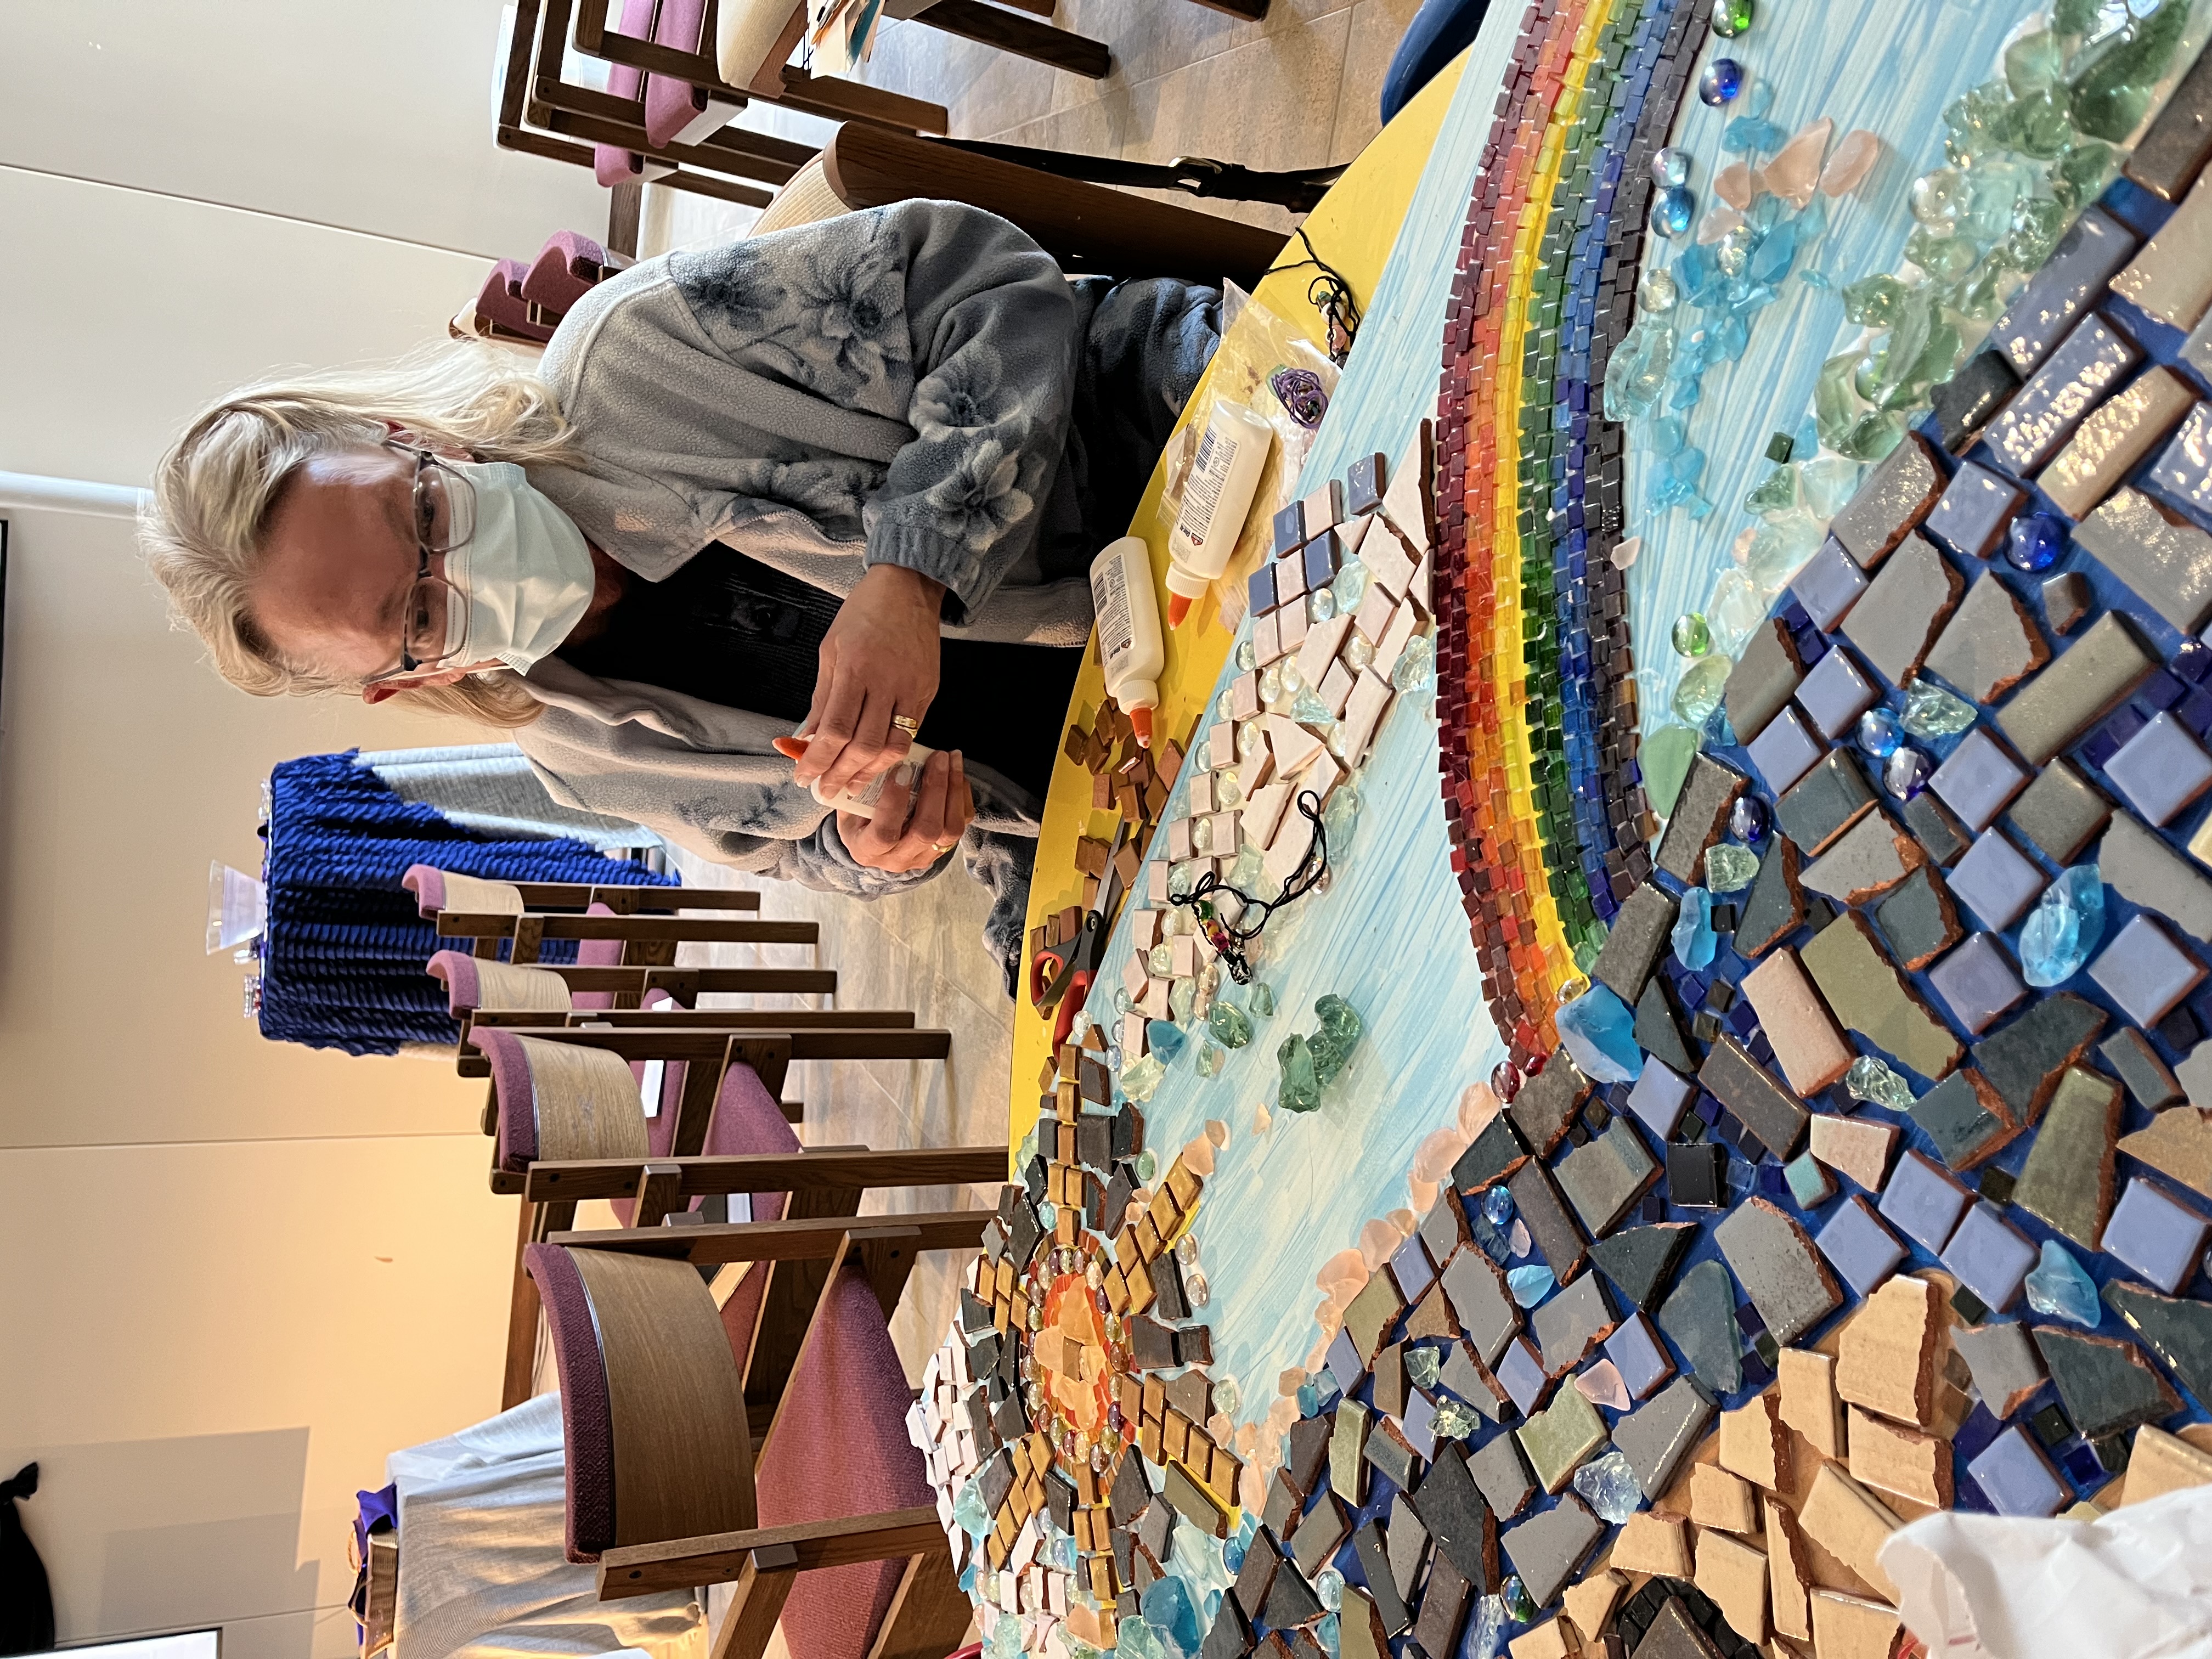 making a mosaic